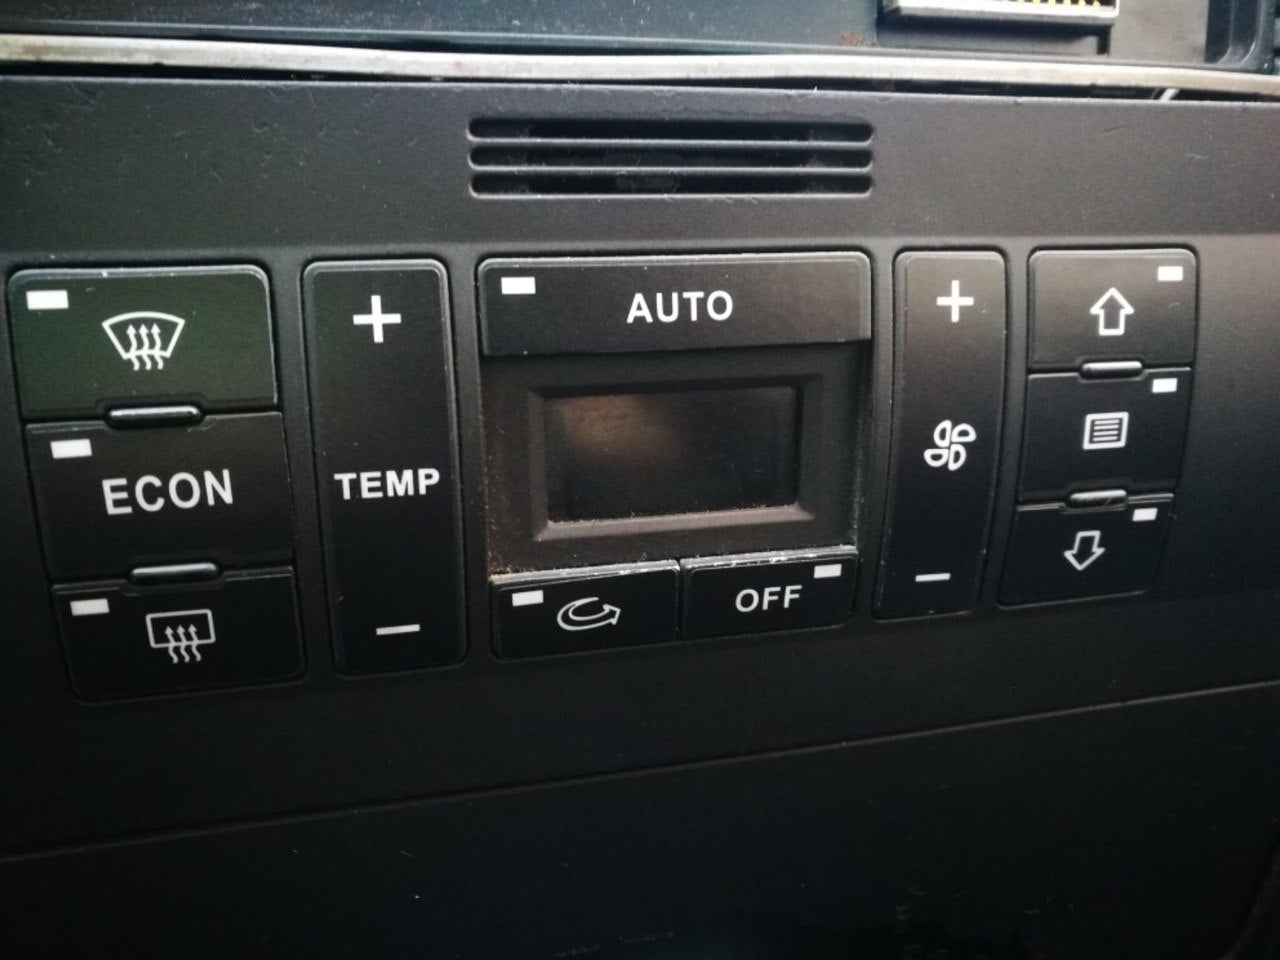 Suitable for Audi A3 8L A/C Button Repair Kit Fix Air Condition Control Switch Button Stickers